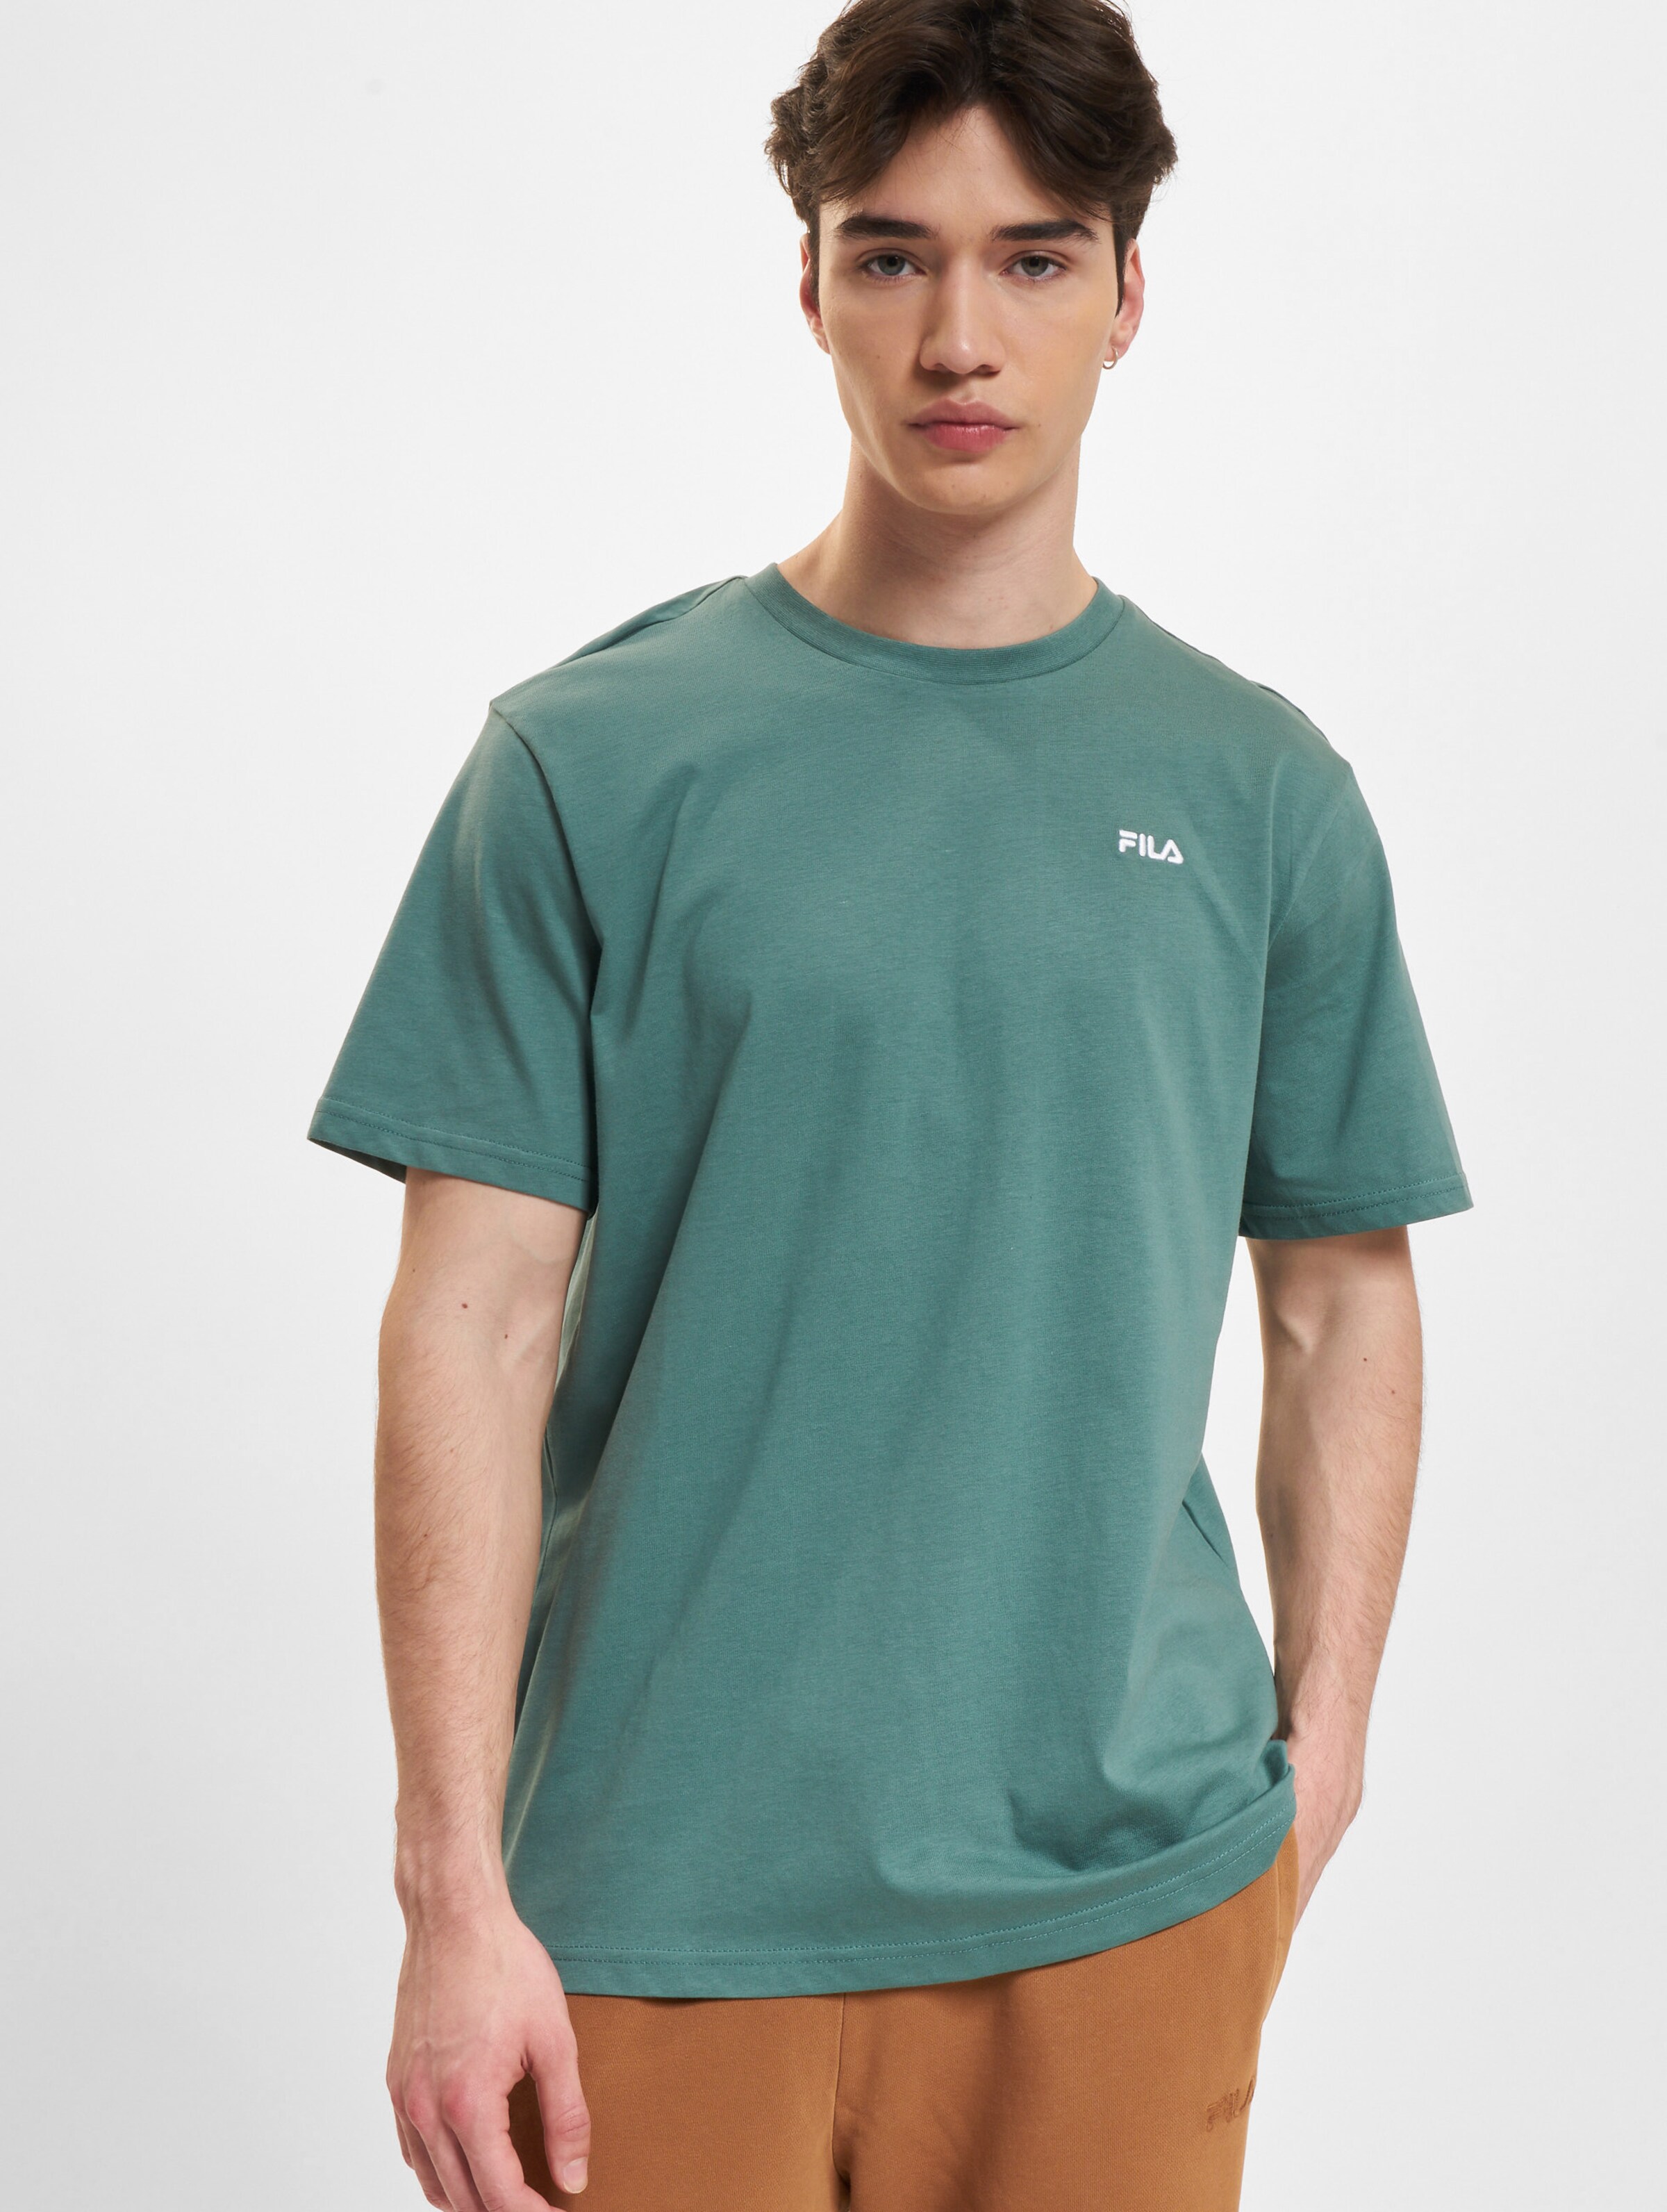 FILA Fila Berloz T-Shirt Mannen op kleur turkoois, Maat XL